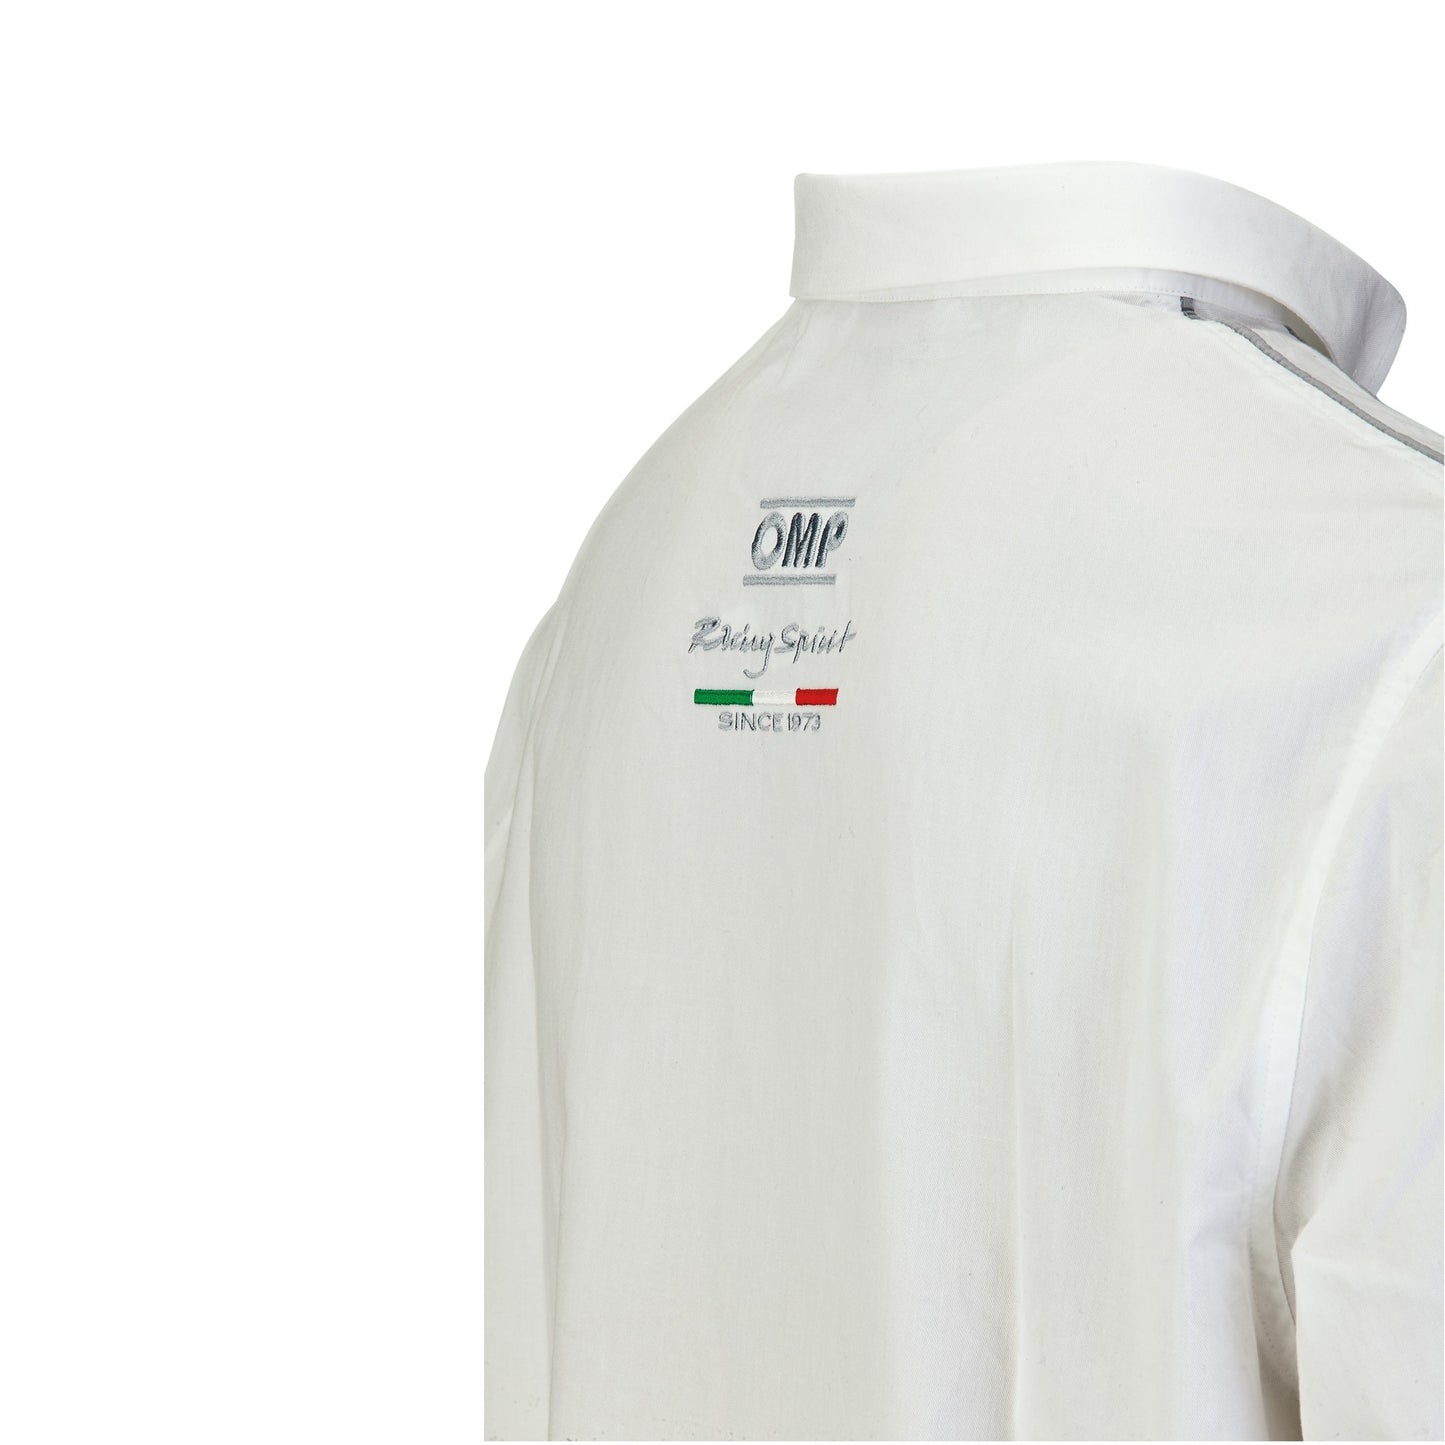 Sale! OMP Racing Spirit Shirt Long Sleeve Cotton White/Grey Teamwear Pitcrew